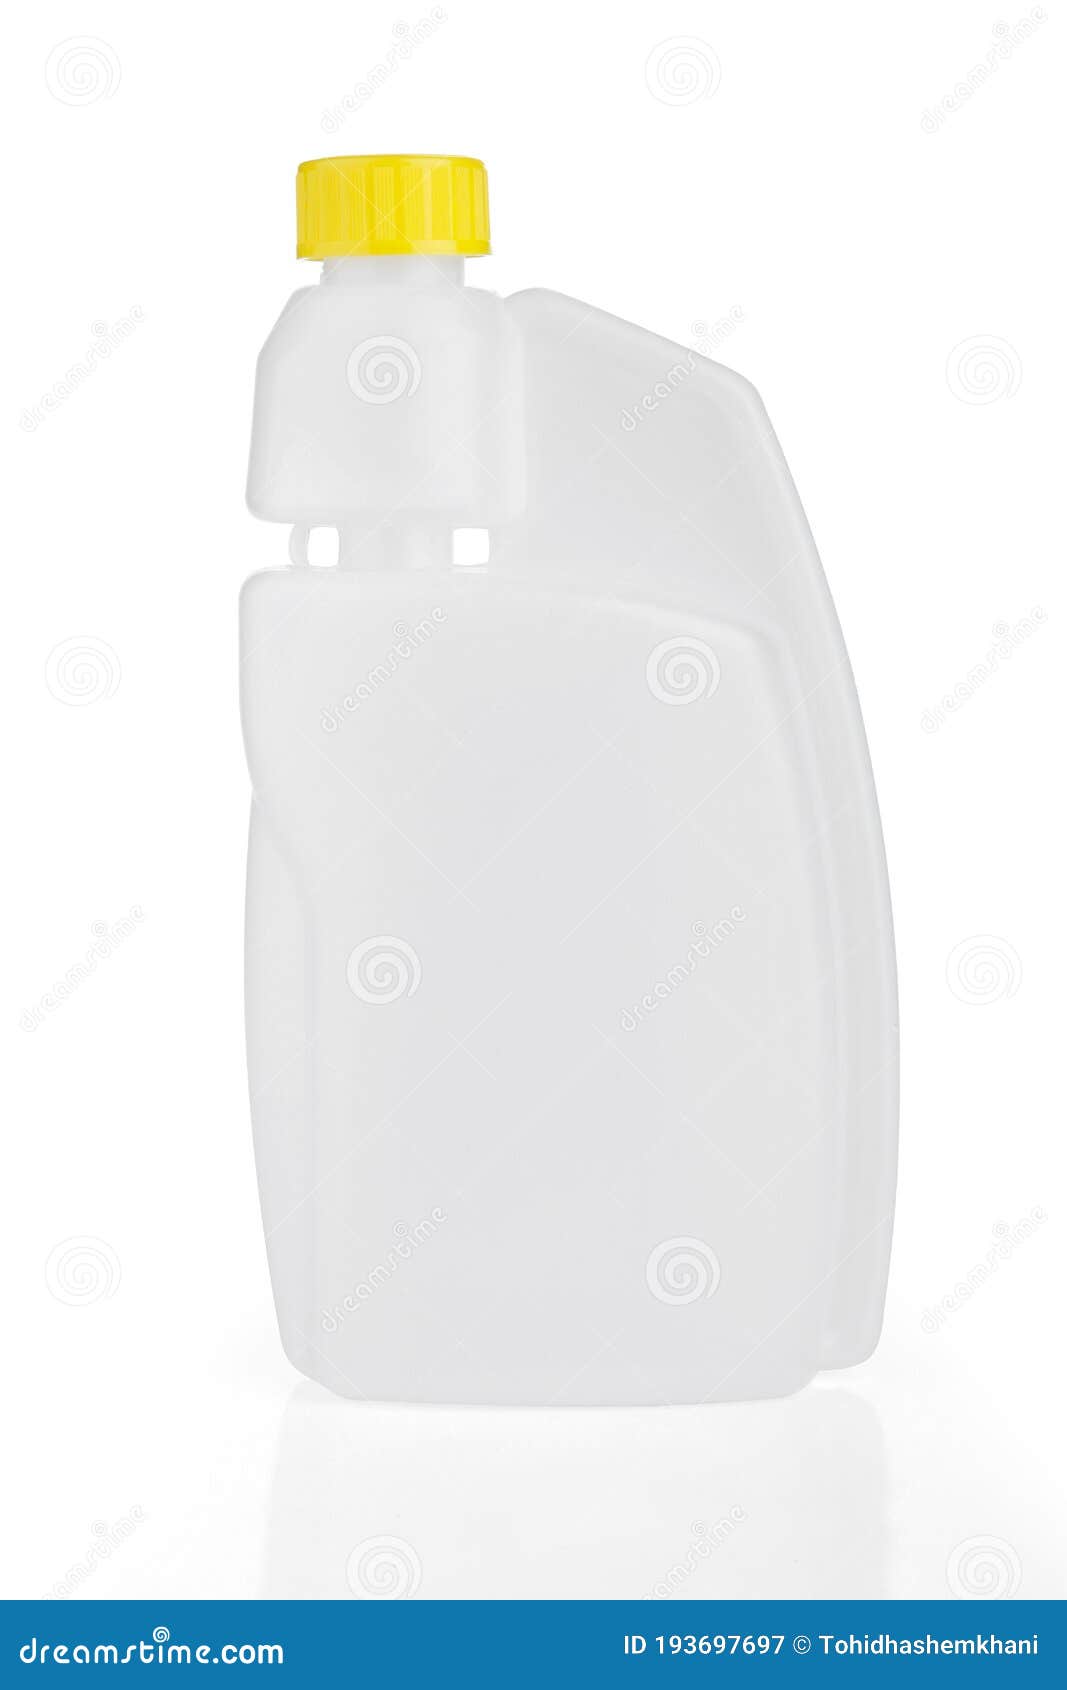 White Plastic Bottle without Label on White Background Stock Image ...